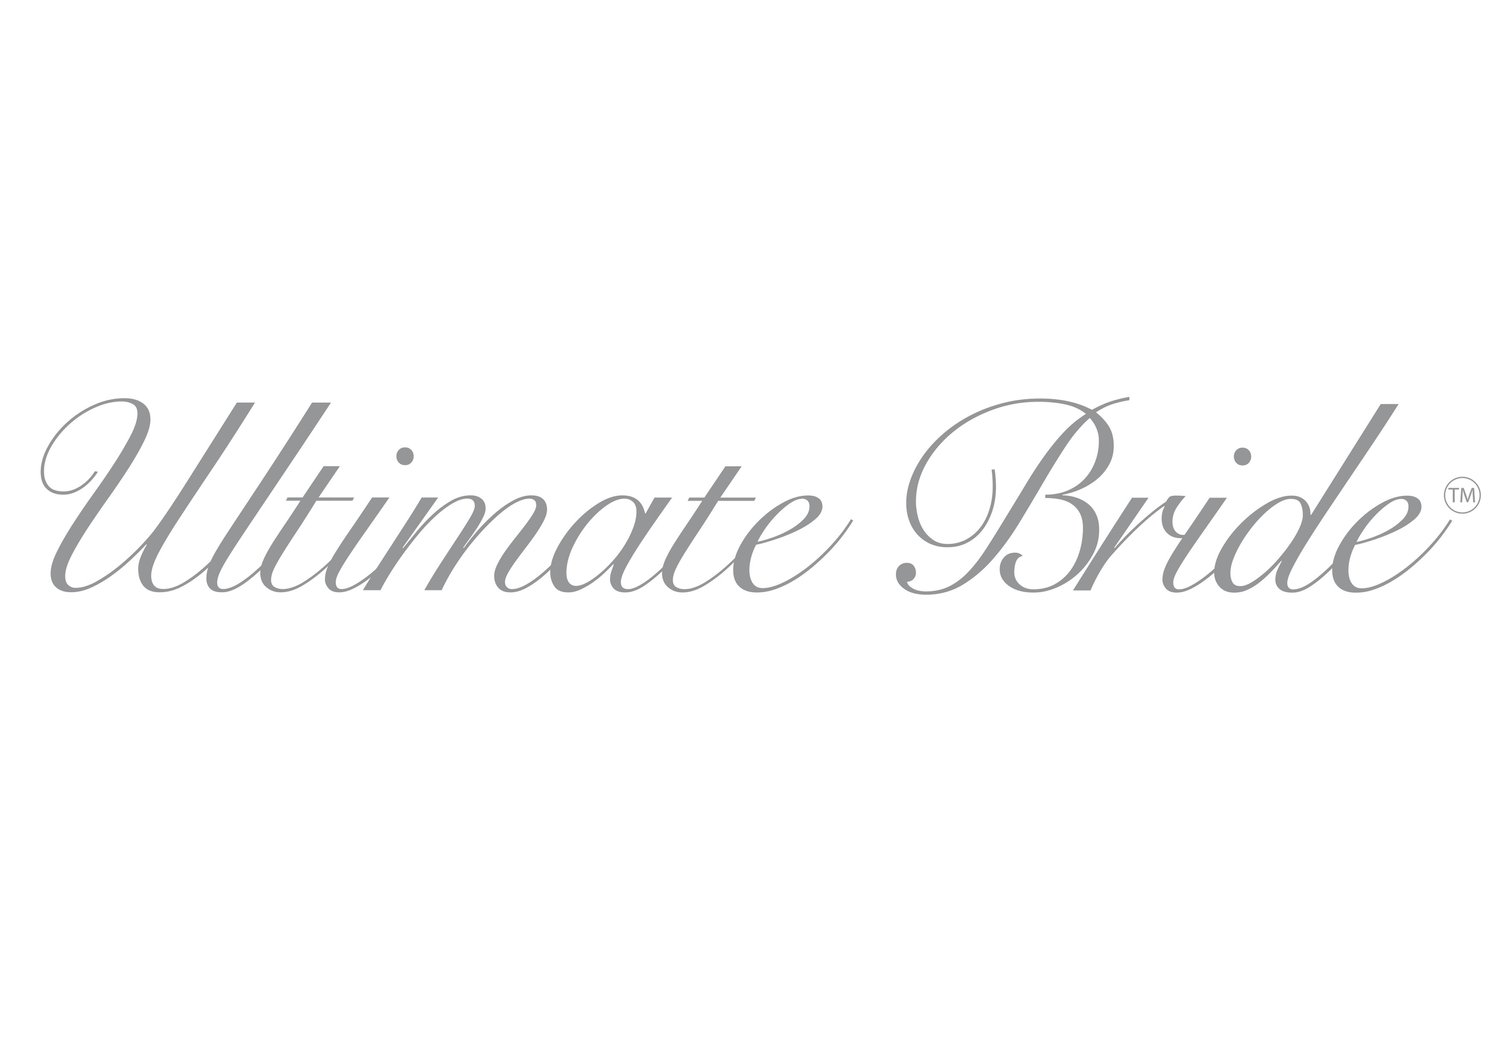 Ultimate Bride